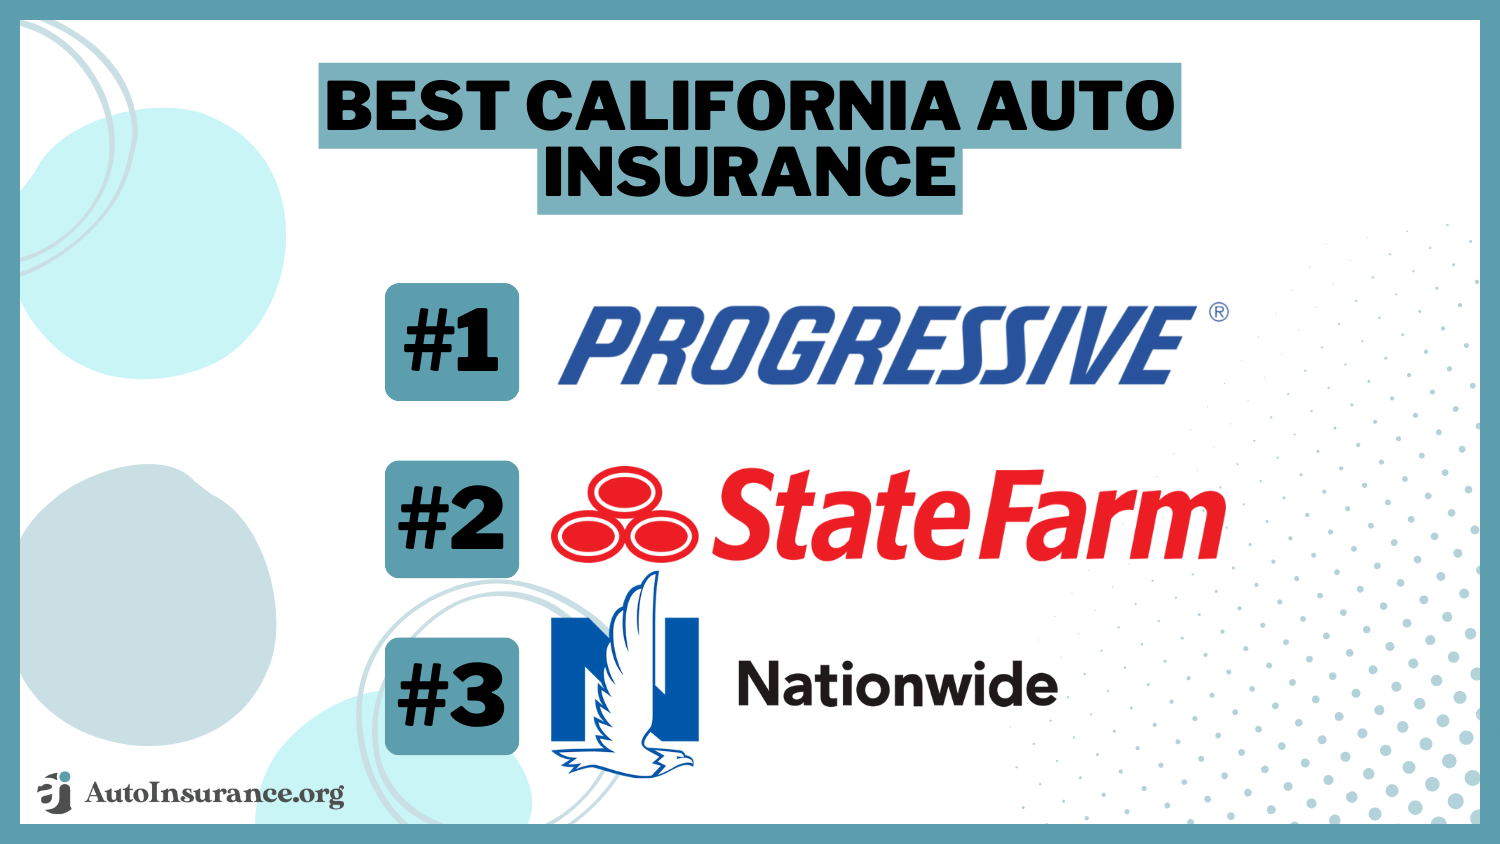 Best California Auto Insurance: Progressive, State Farm, and Nationwide.